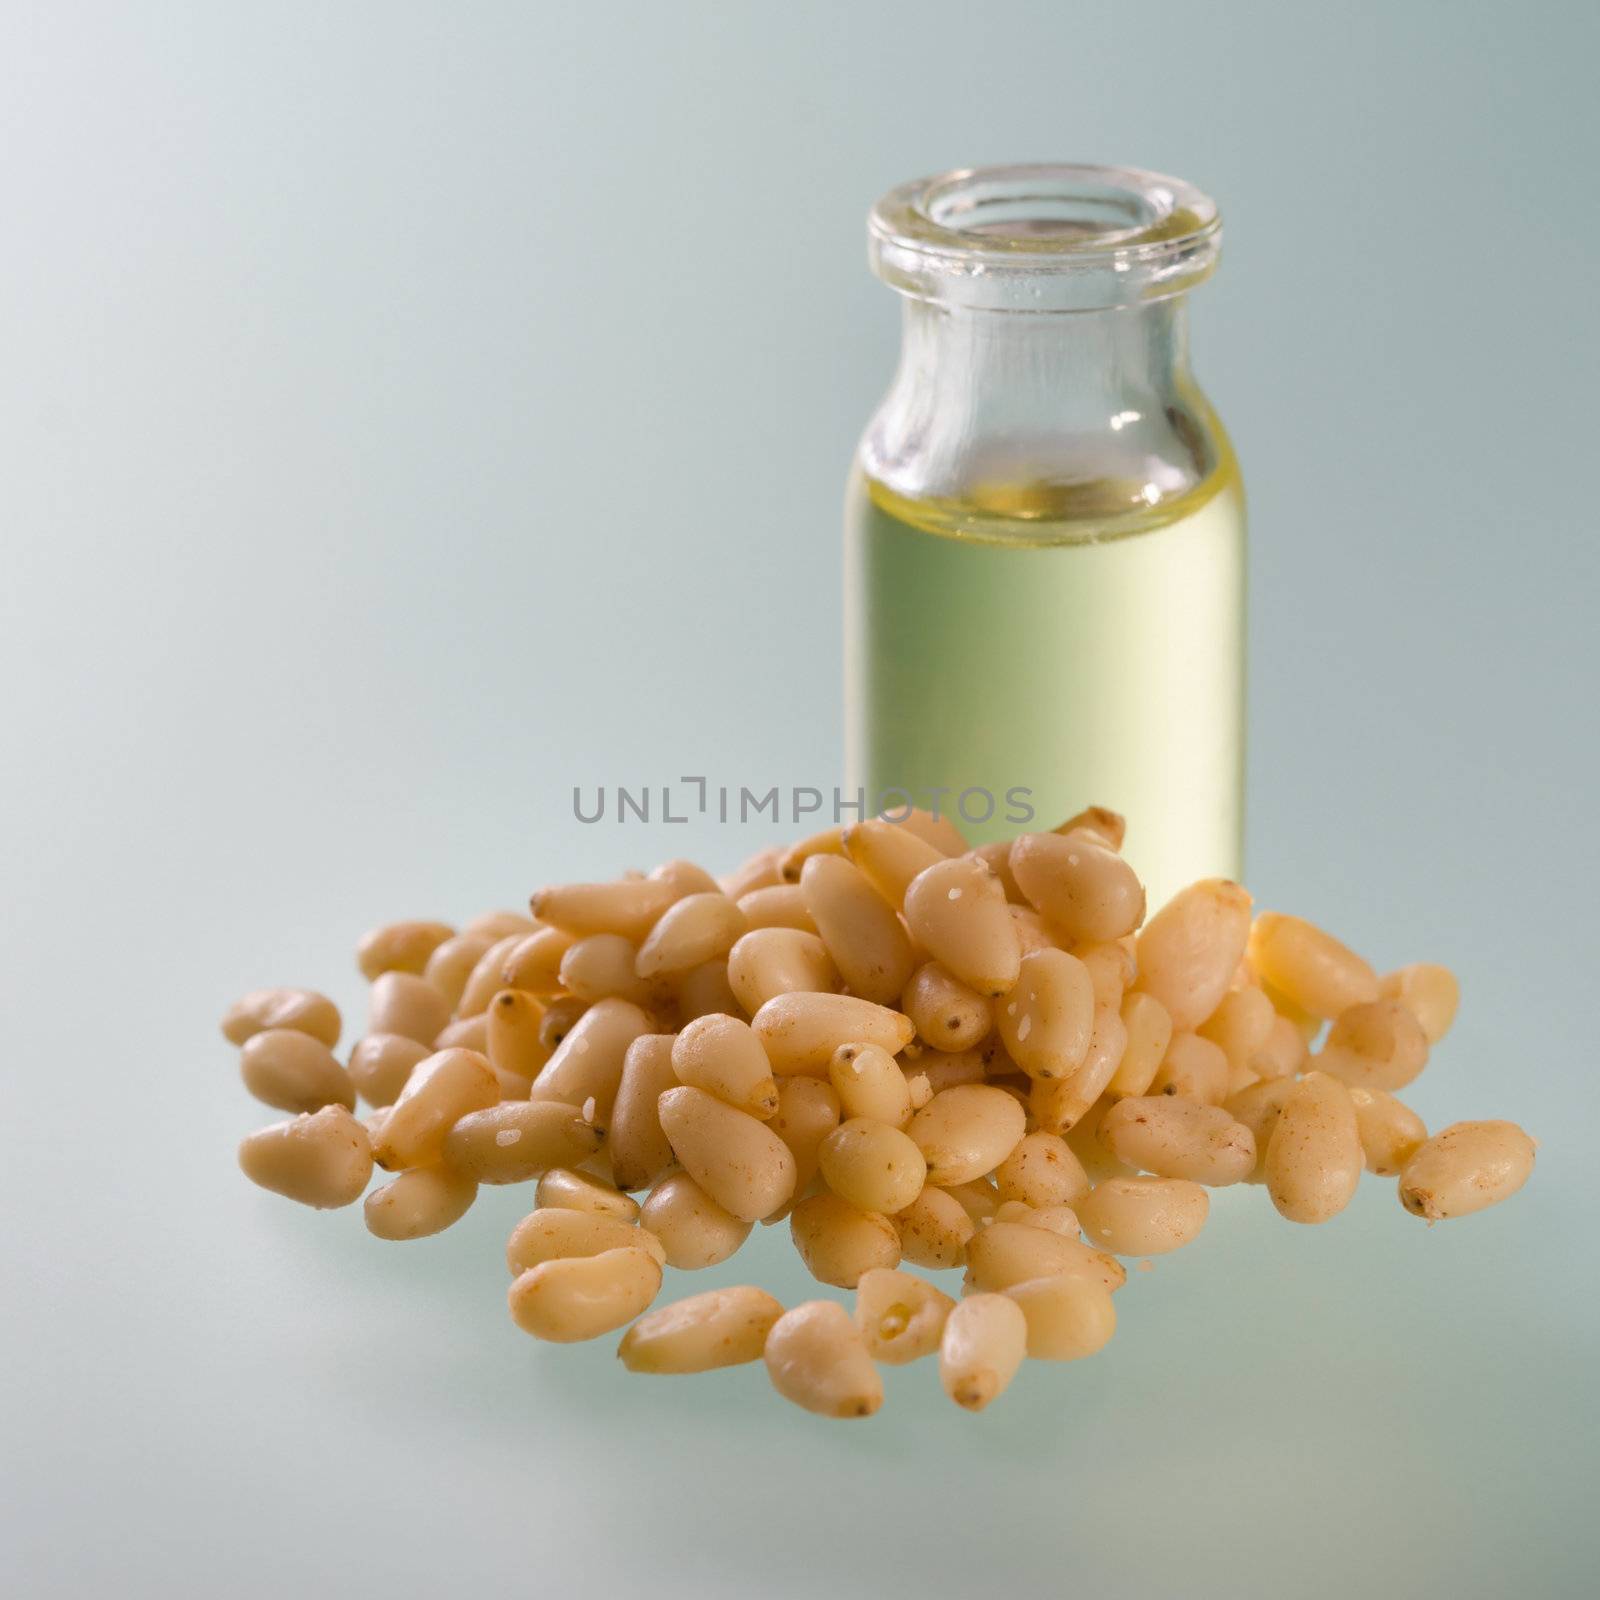 Bottle of cedar oil and nuts  by iryna_rasko